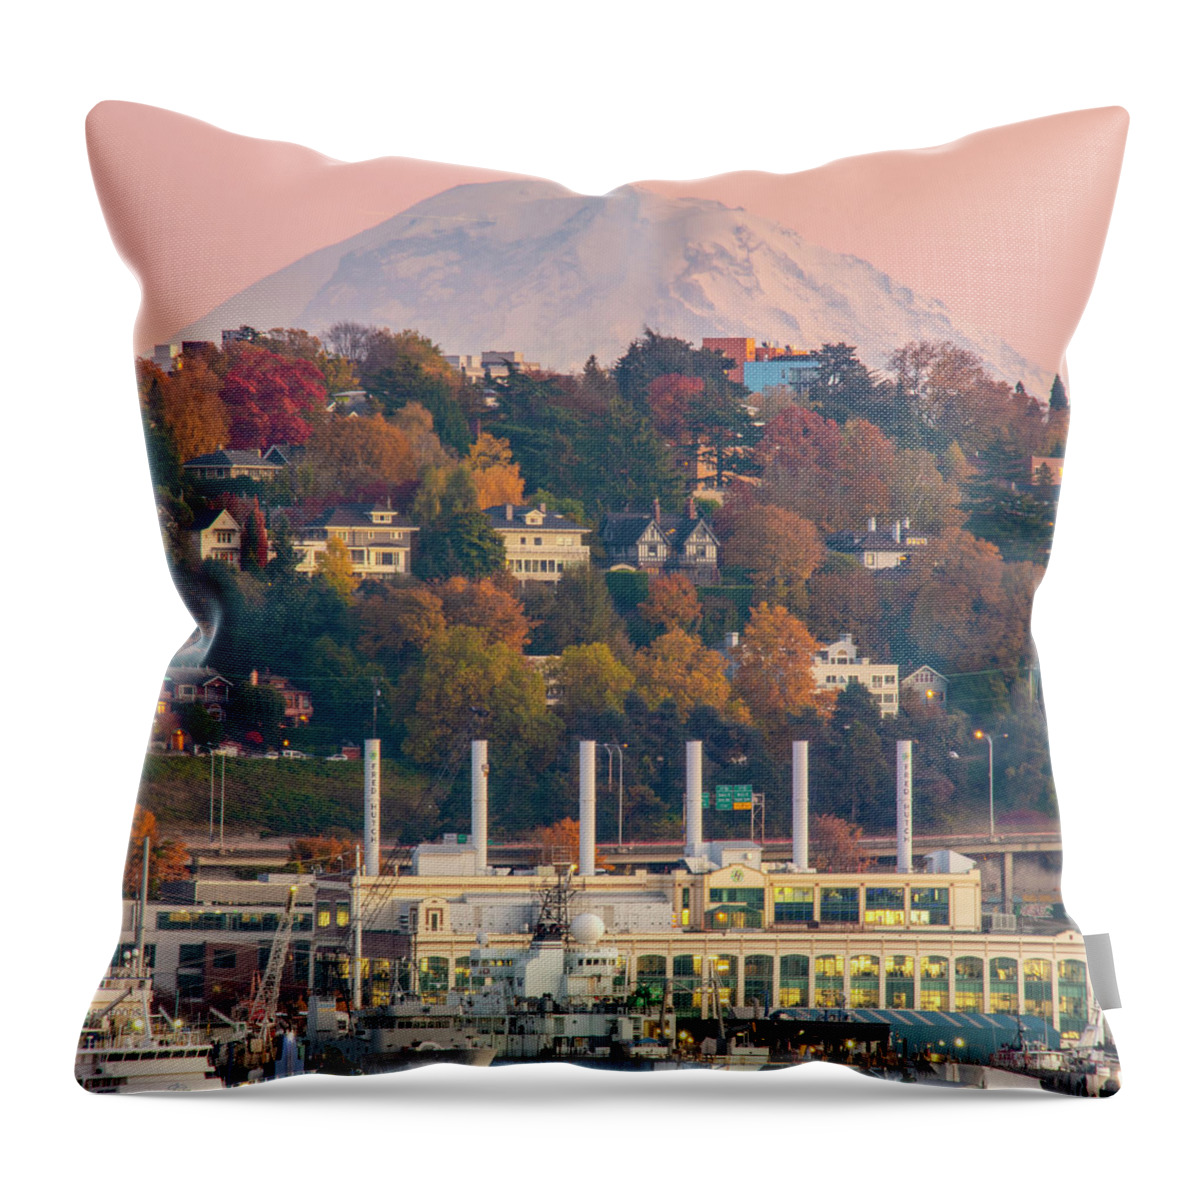 Mount Rainier Throw Pillow featuring the photograph Mount Rainier Rising Above Fall Colors In Seattle by Matt McDonald